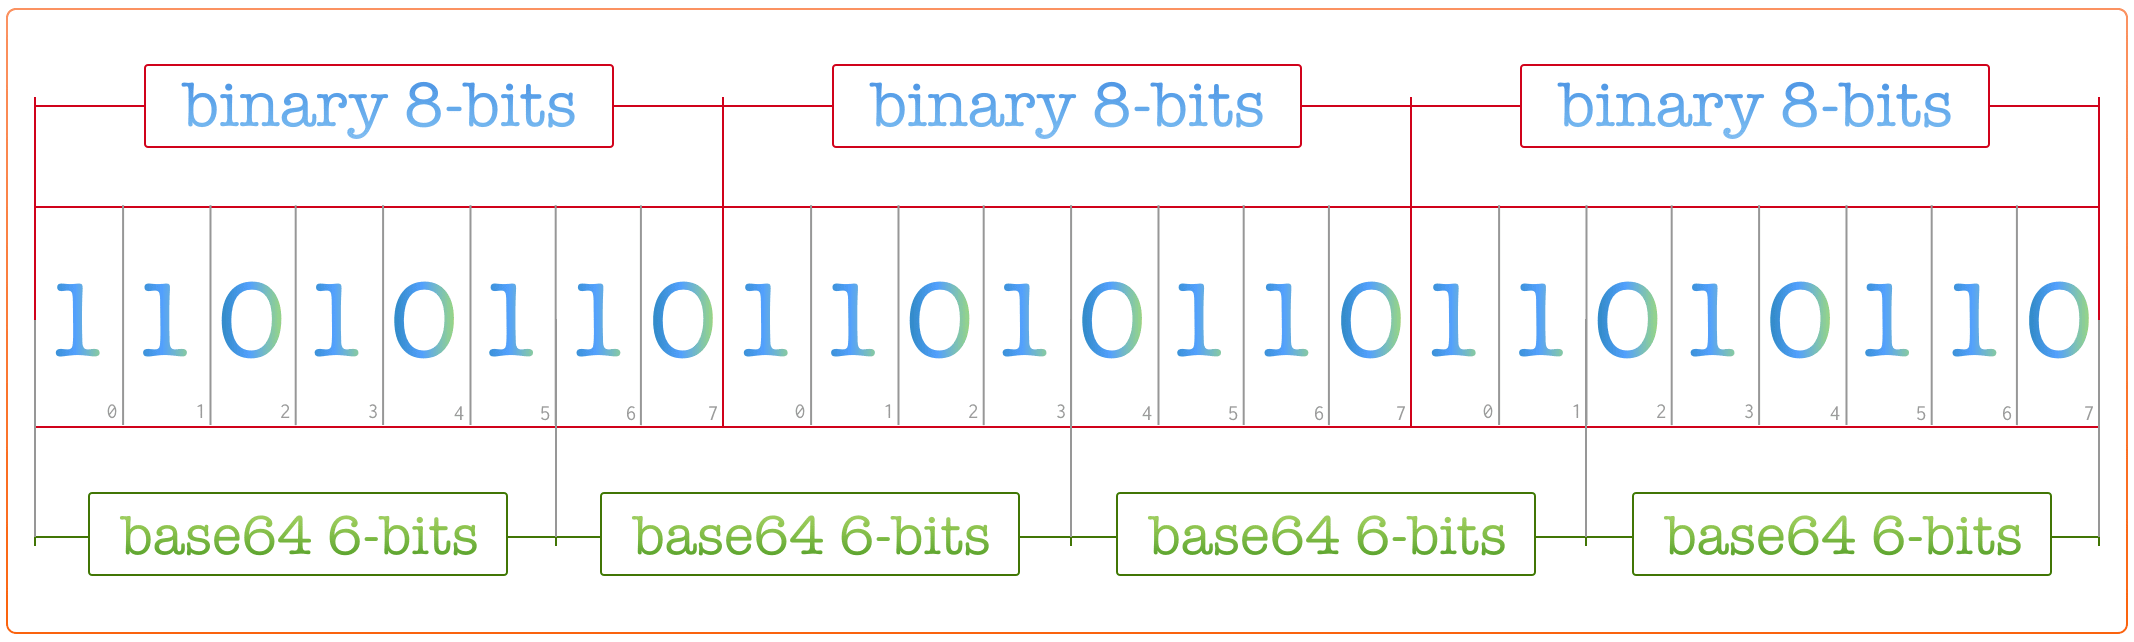 base64 binary to ascii text encoding encoded 13 times